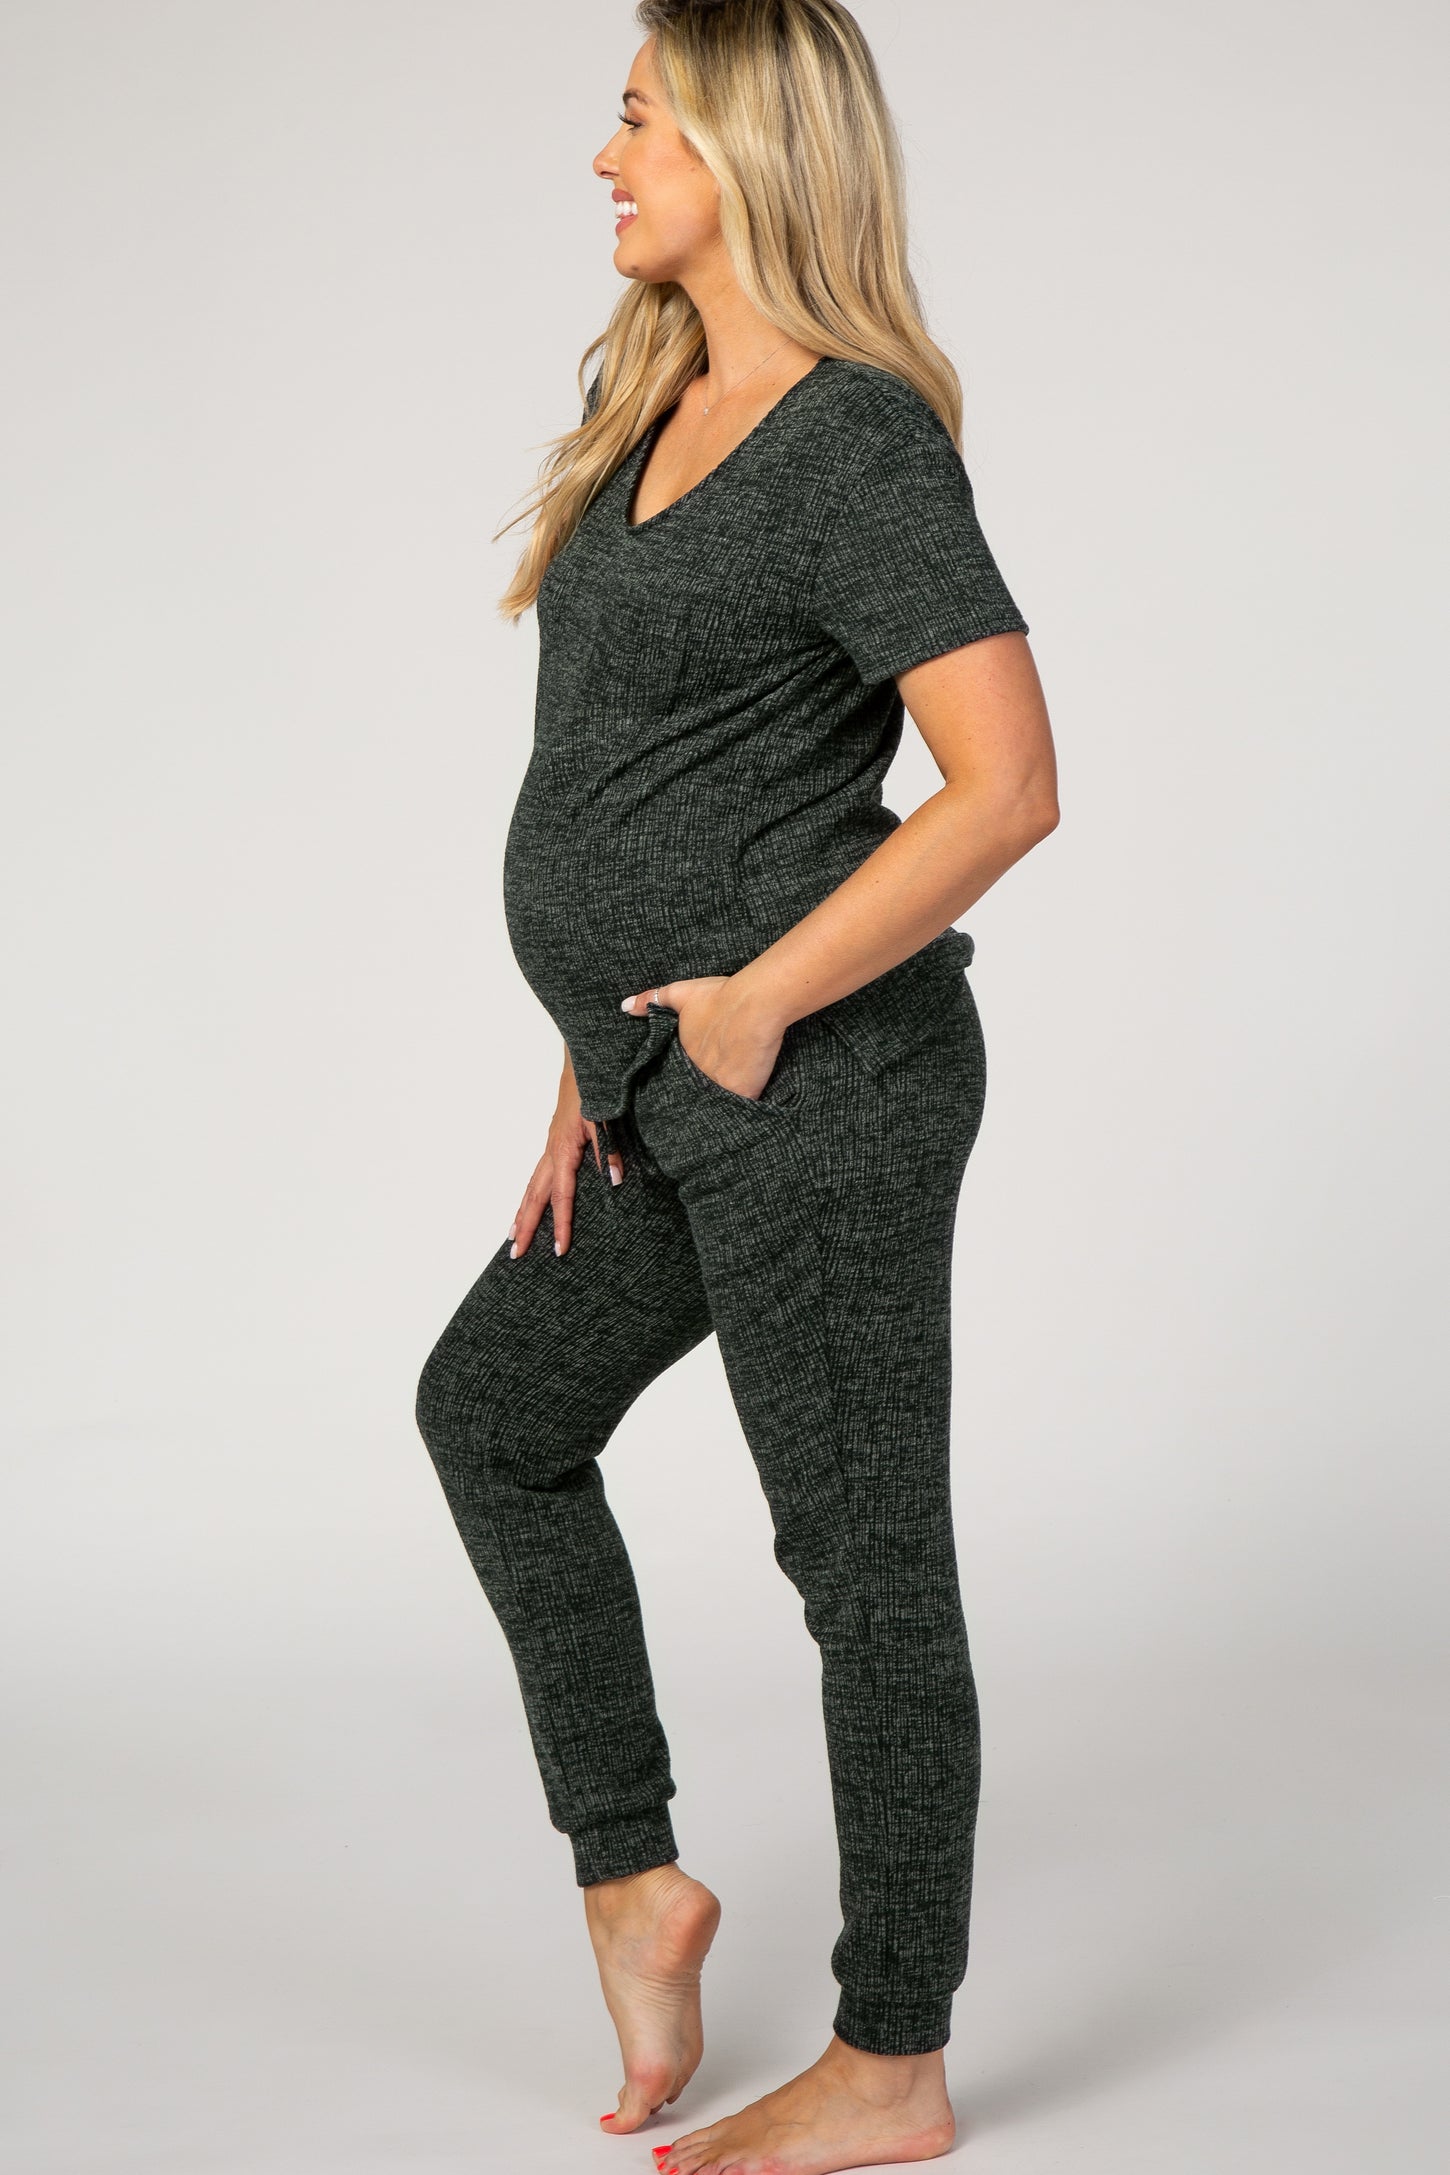 Forest Green Knit Short Sleeve Maternity Pajama Set